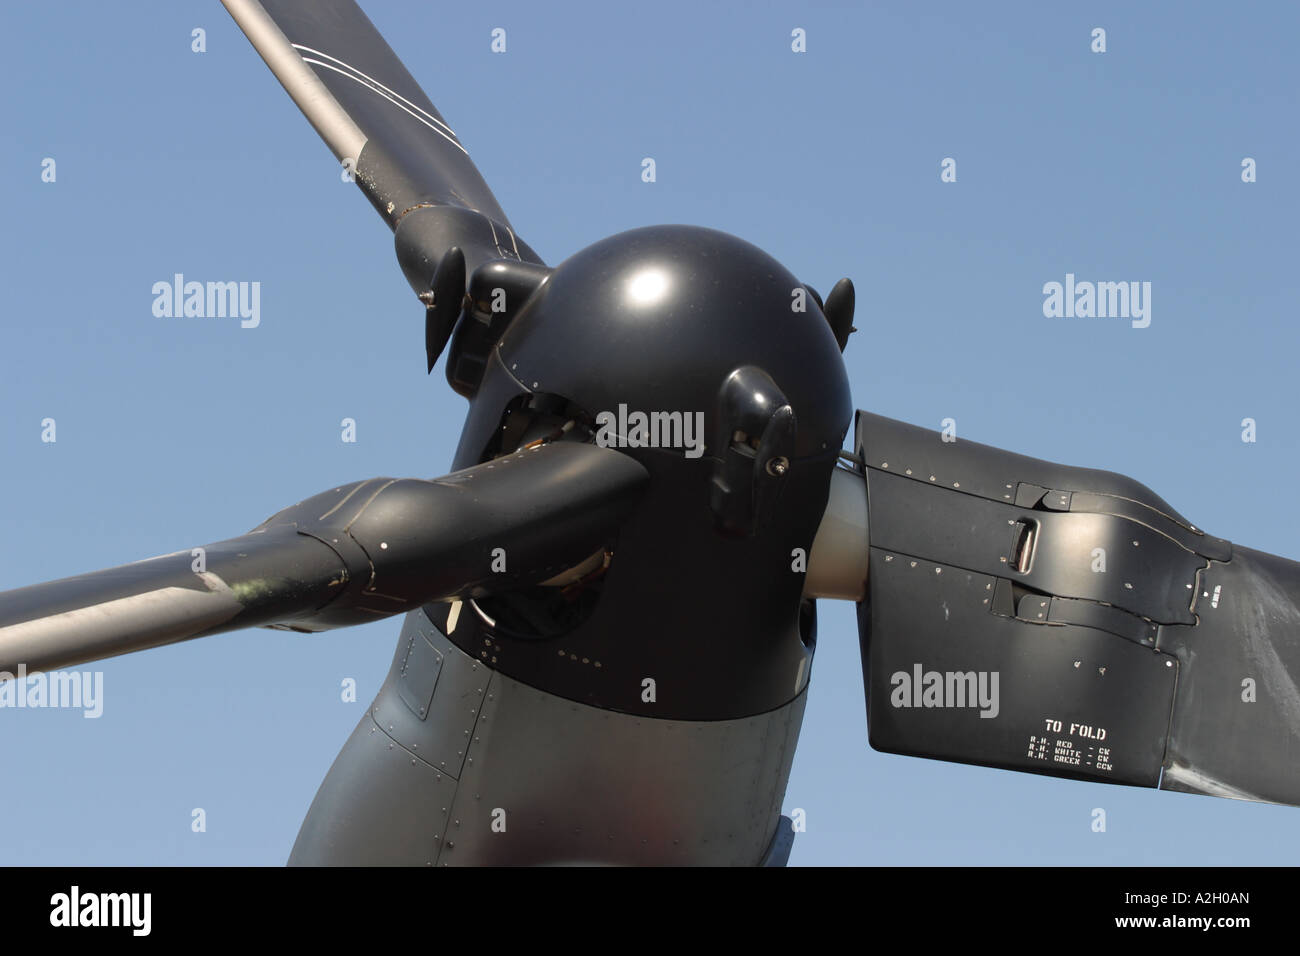 Boeing MV-22 Osprey tilt rotor propeller aircraft of the USMC Stock Photo